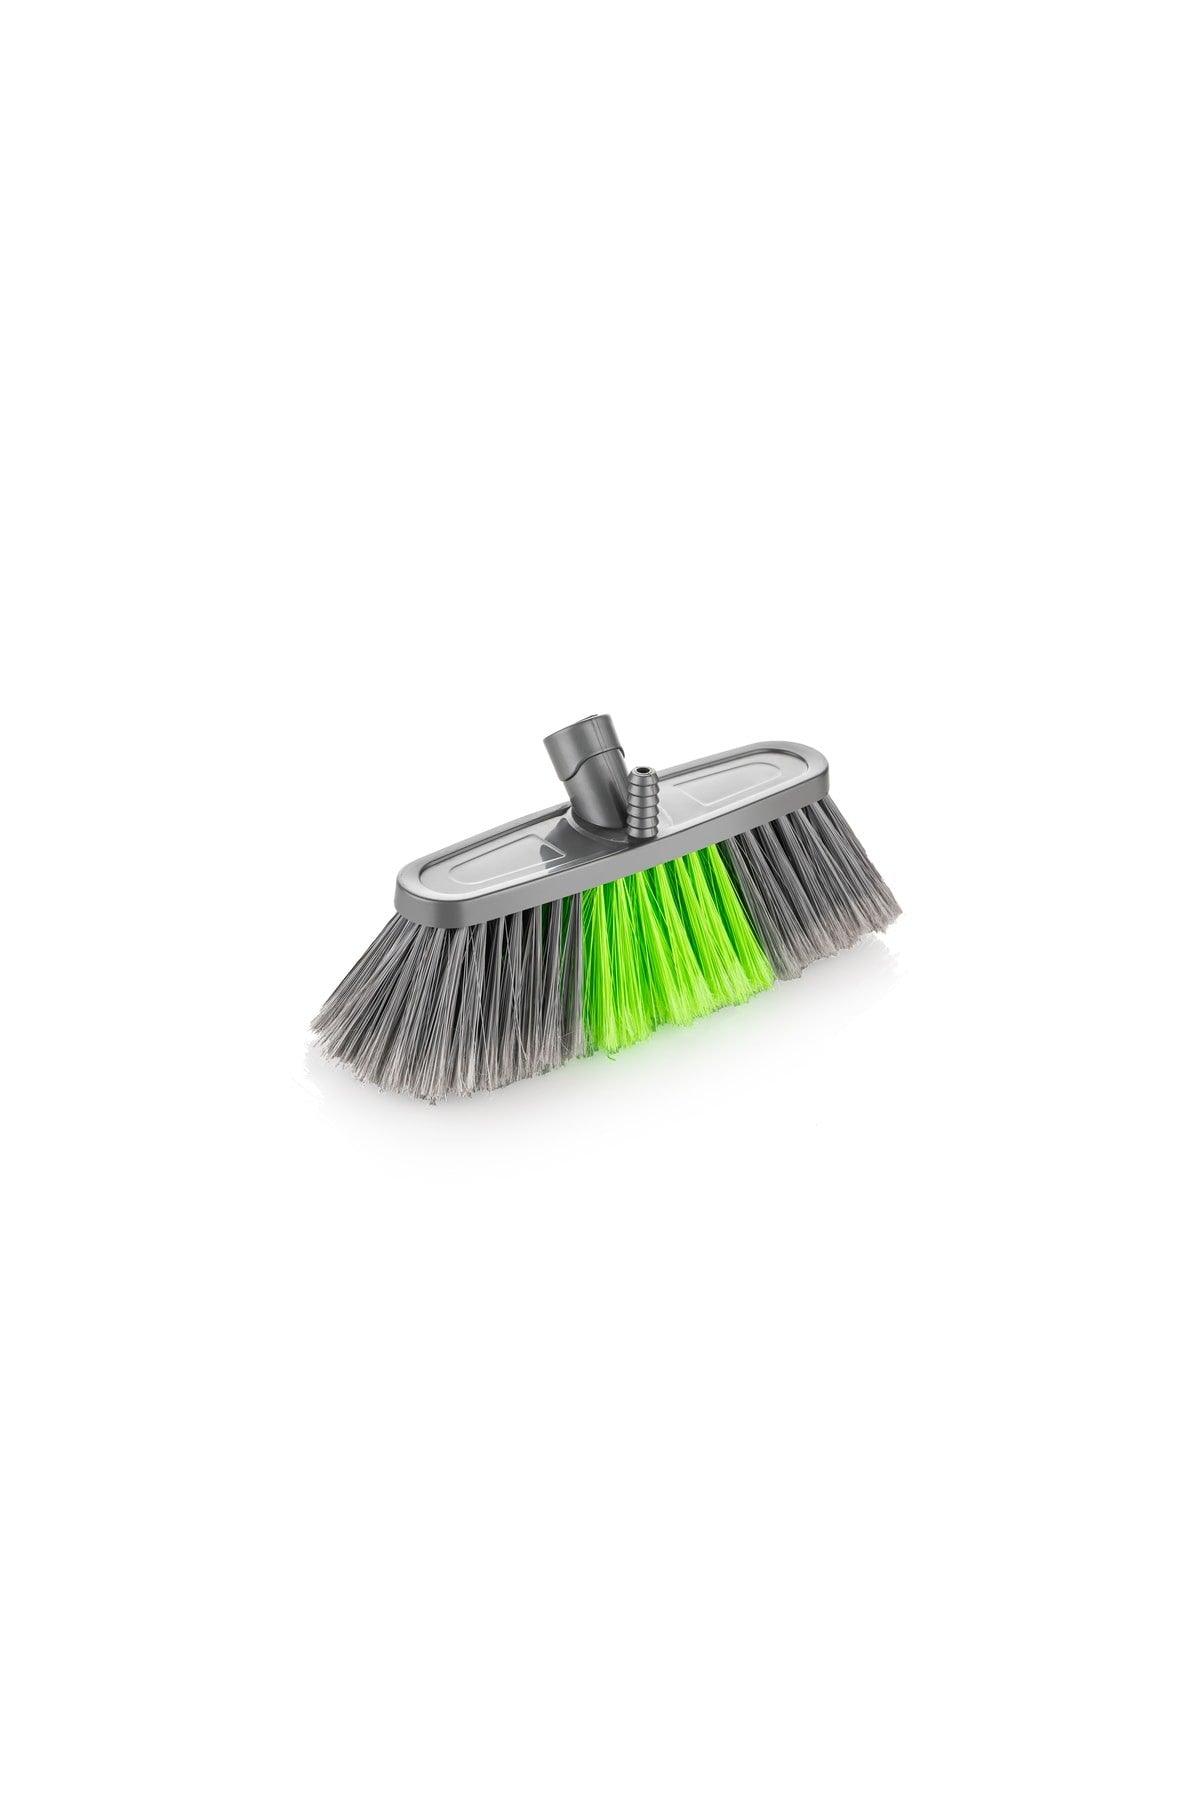 Car Brush - Green Floor Brush Vacuum Cleaner 15 Cm. Eh-500 - Swordslife